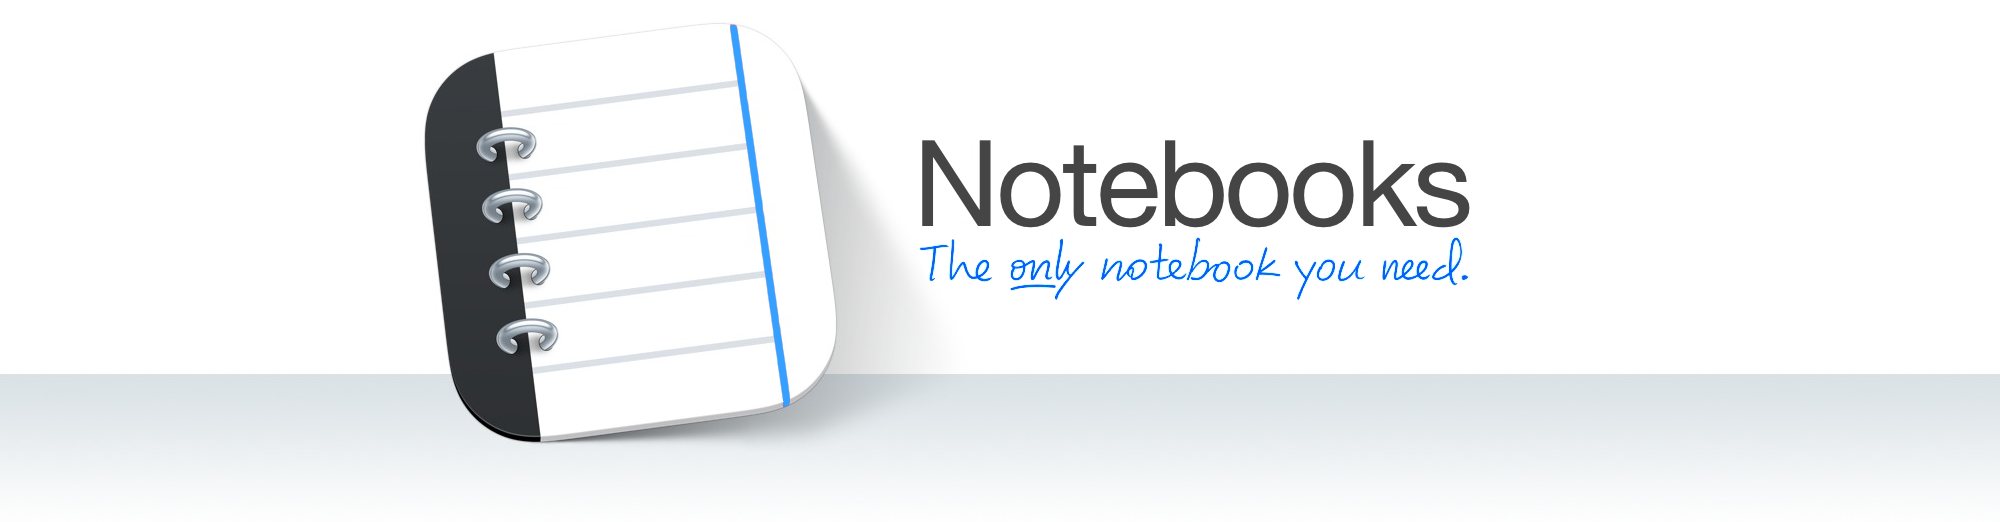 Mac App Store Notebook